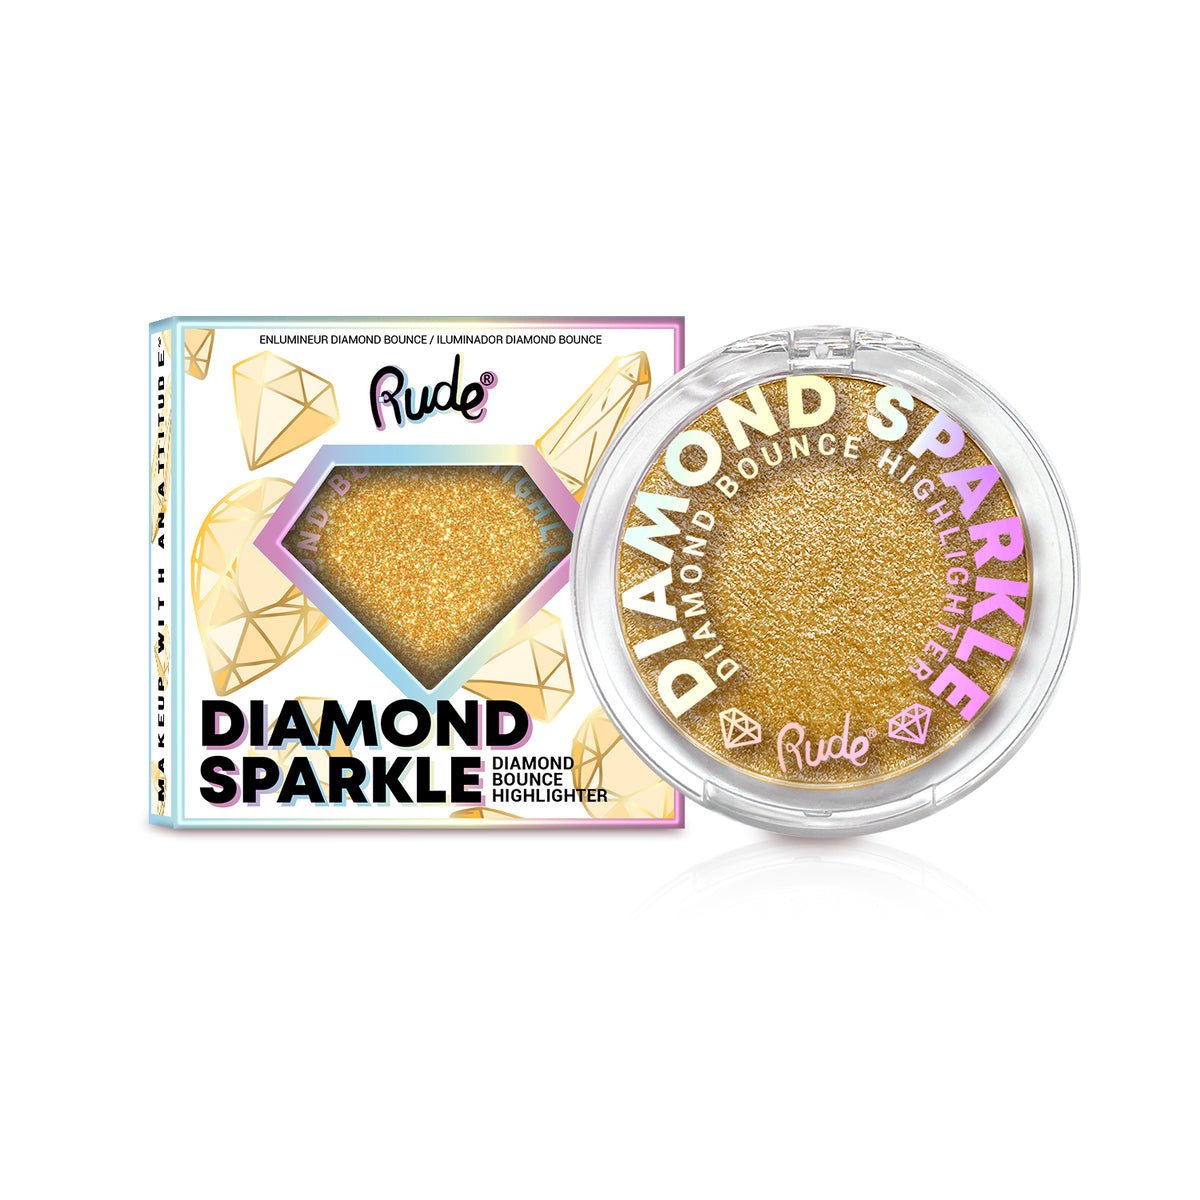 Diamond Sparkle Diamond Bounce Highlighter Display Set, 36pcs